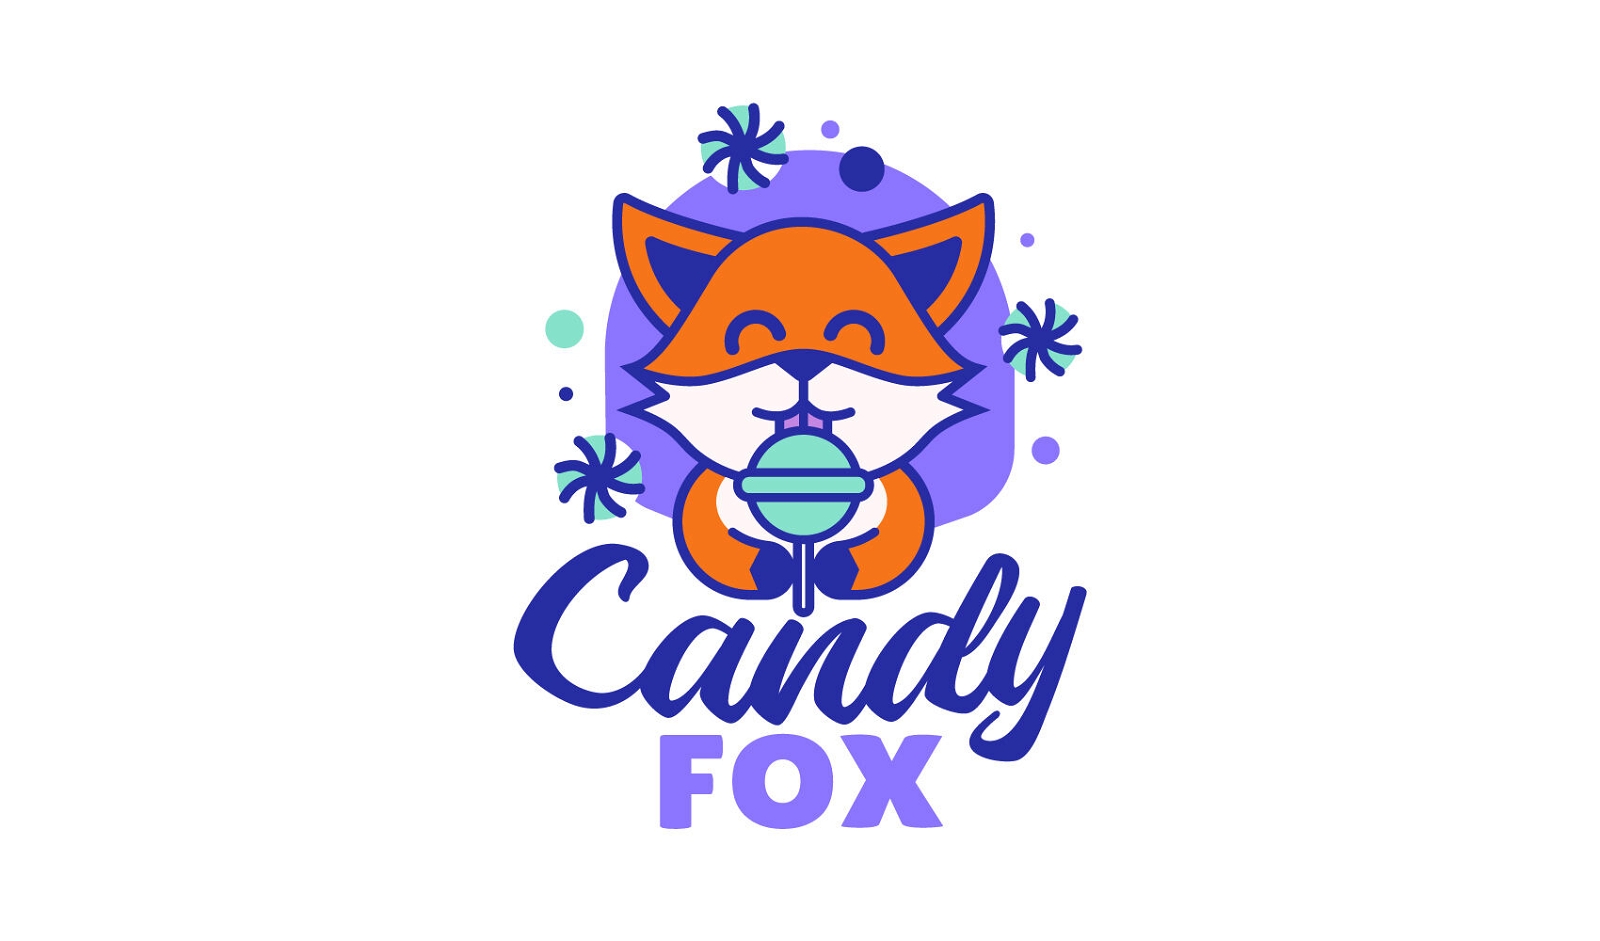 Candy fox logo design